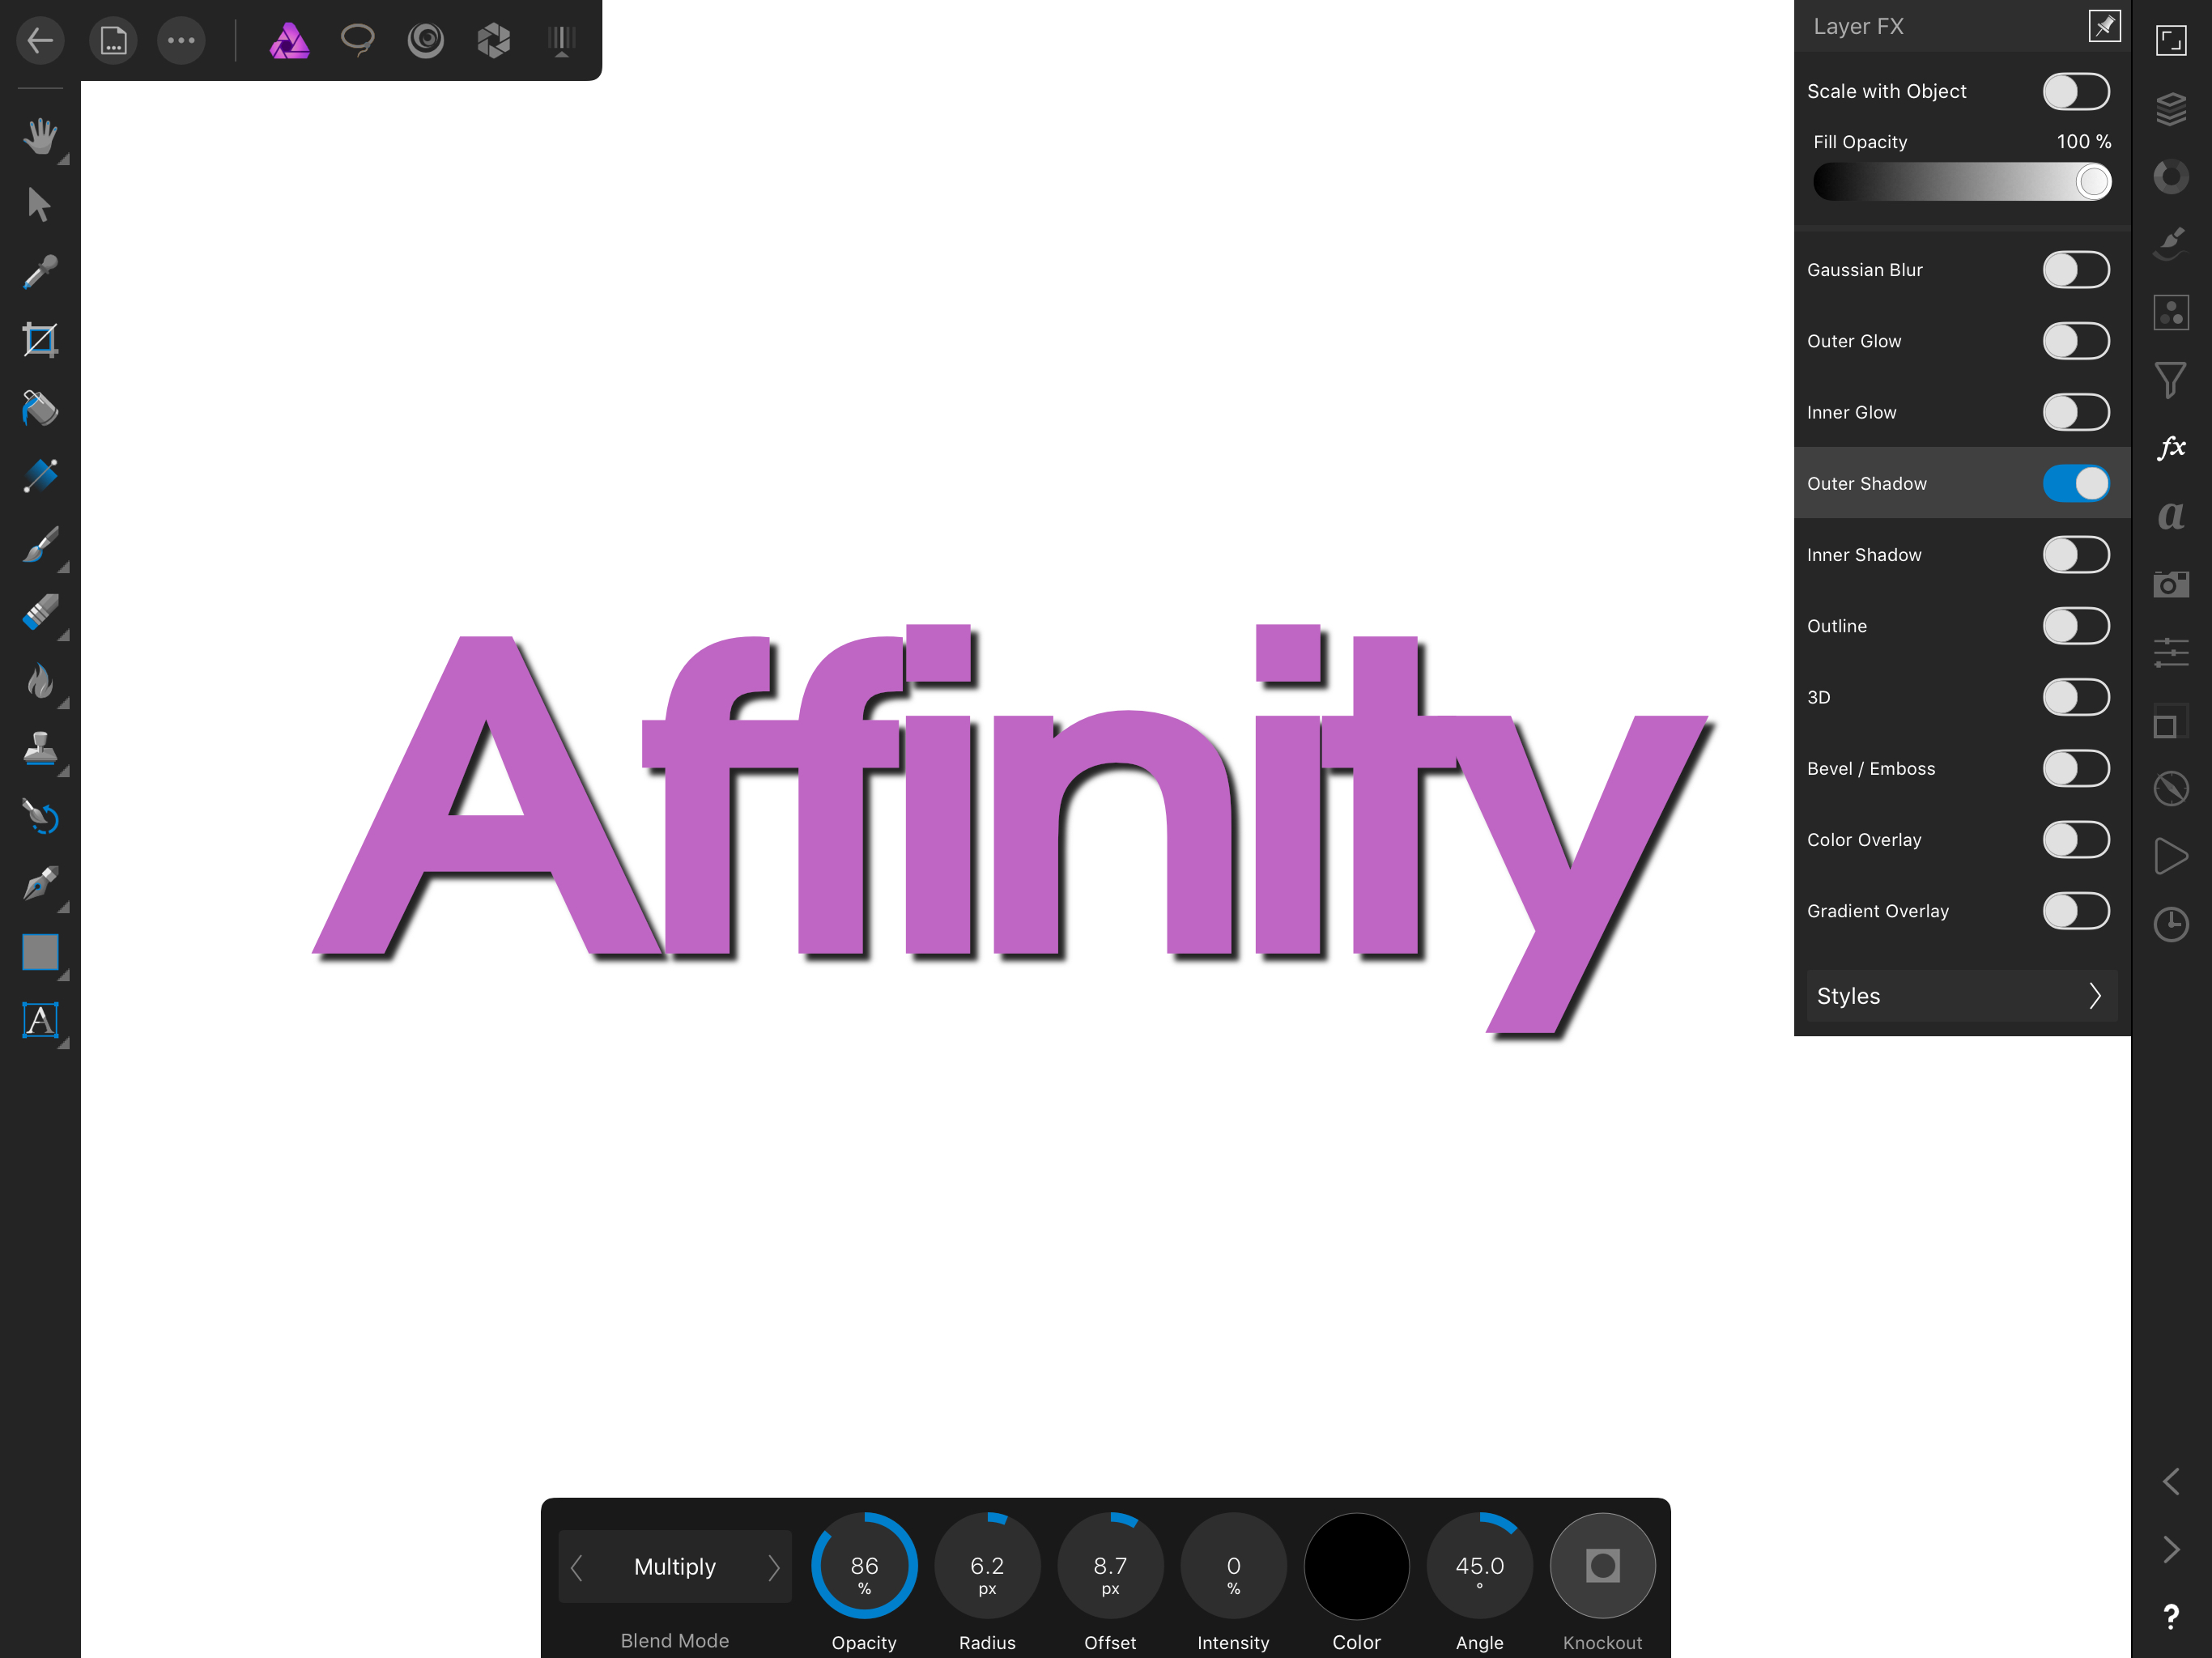 affinity ipad app